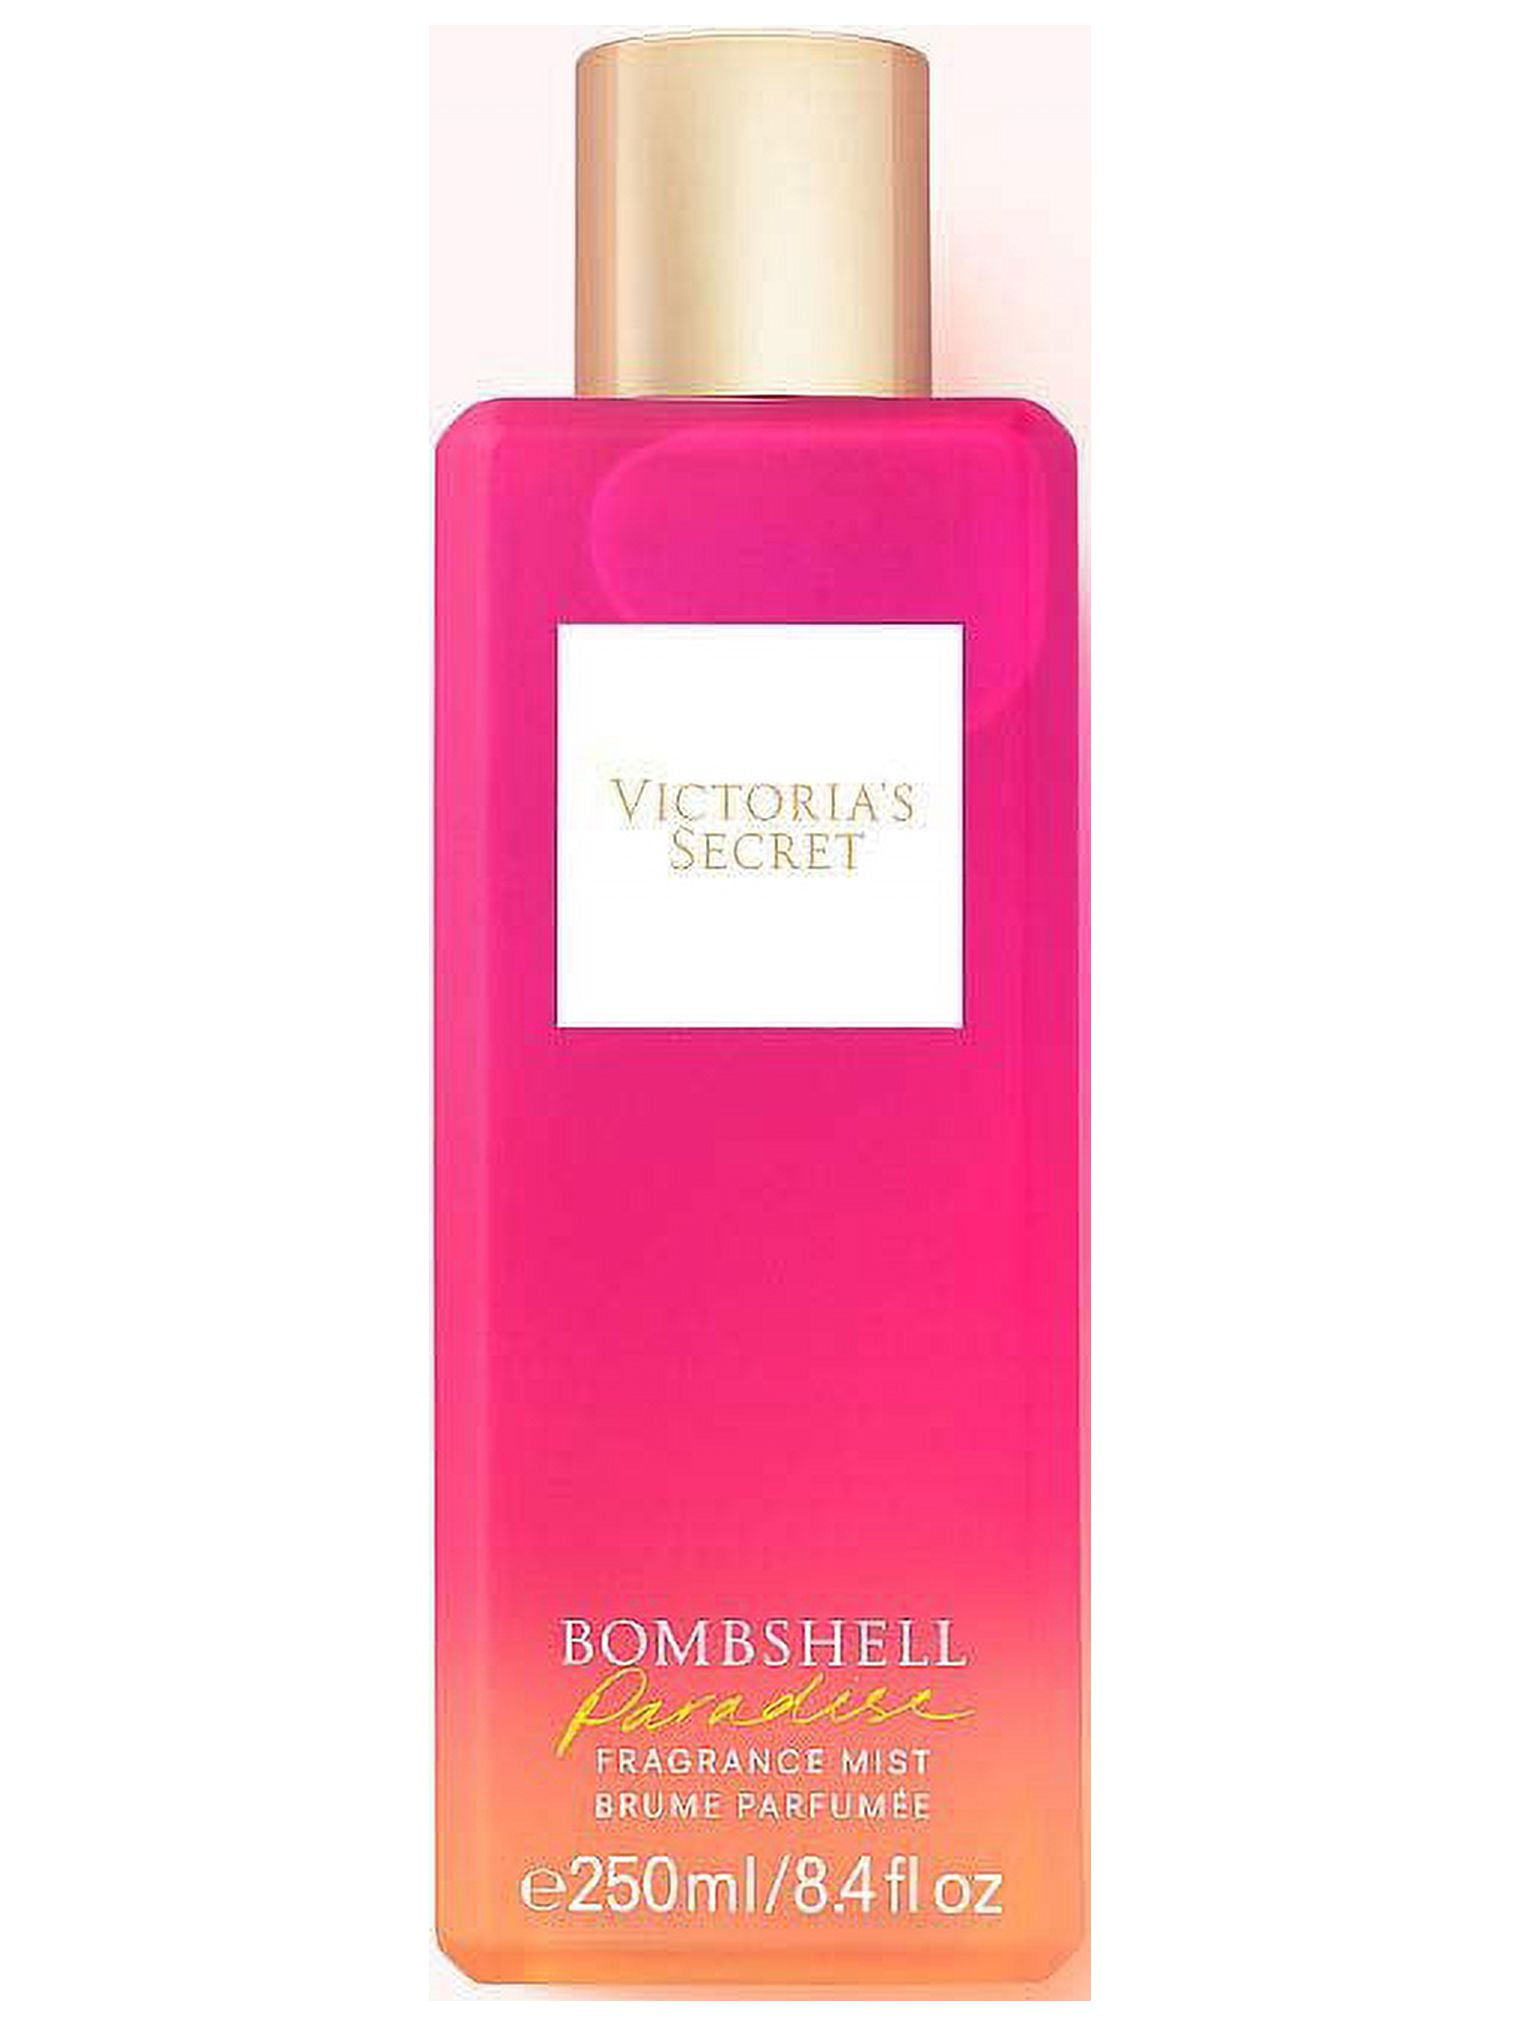 Bombshell Paradise by Victoria's Secret Fragrance Mist 8.4 oz for